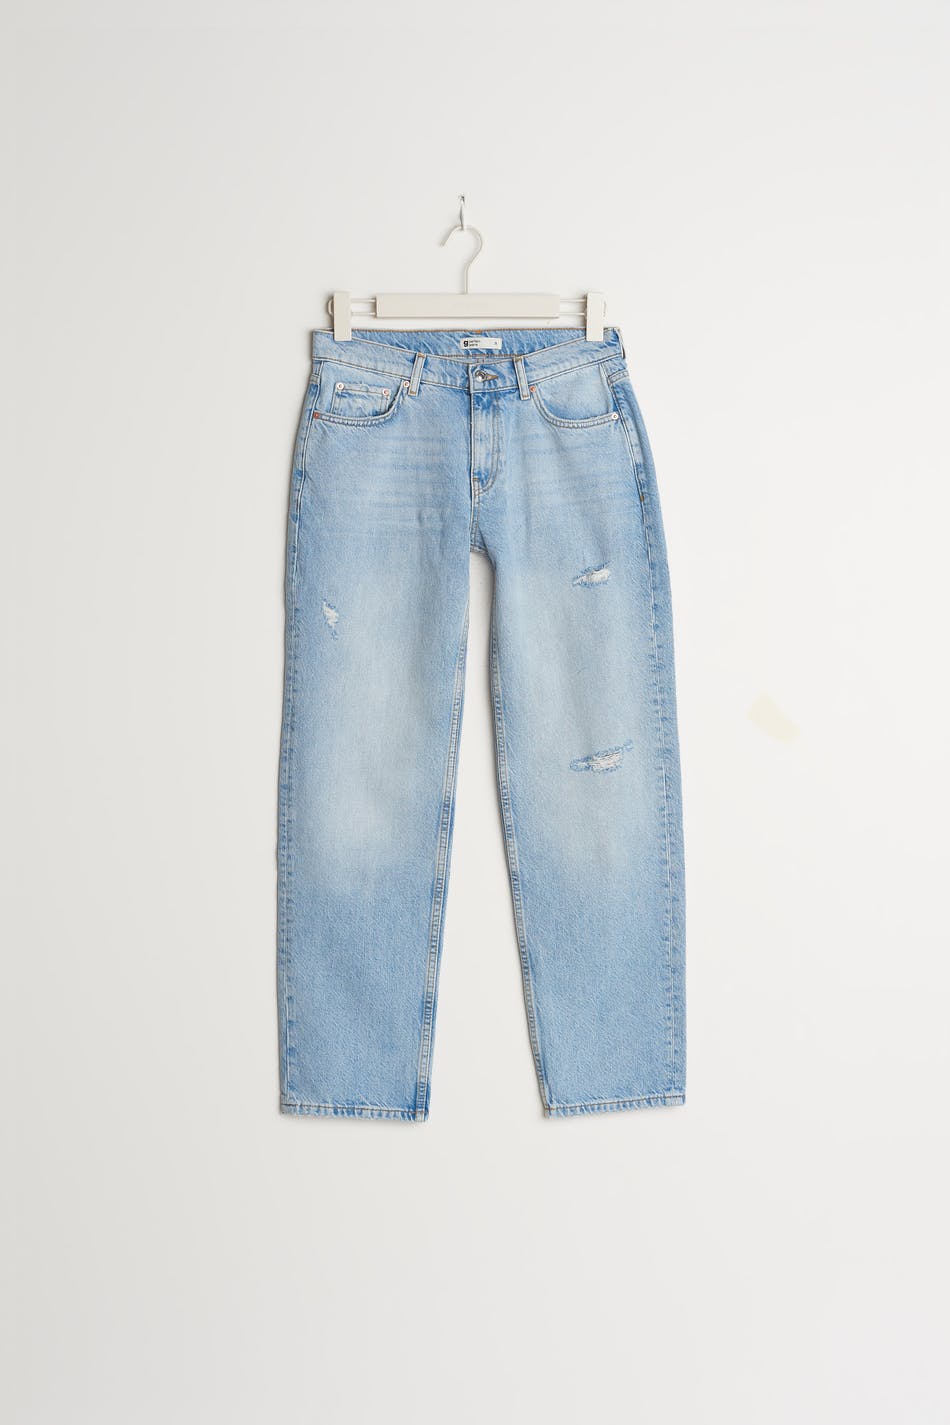 Gina Tricot 90s petite low waist jeans 40  Lt blue